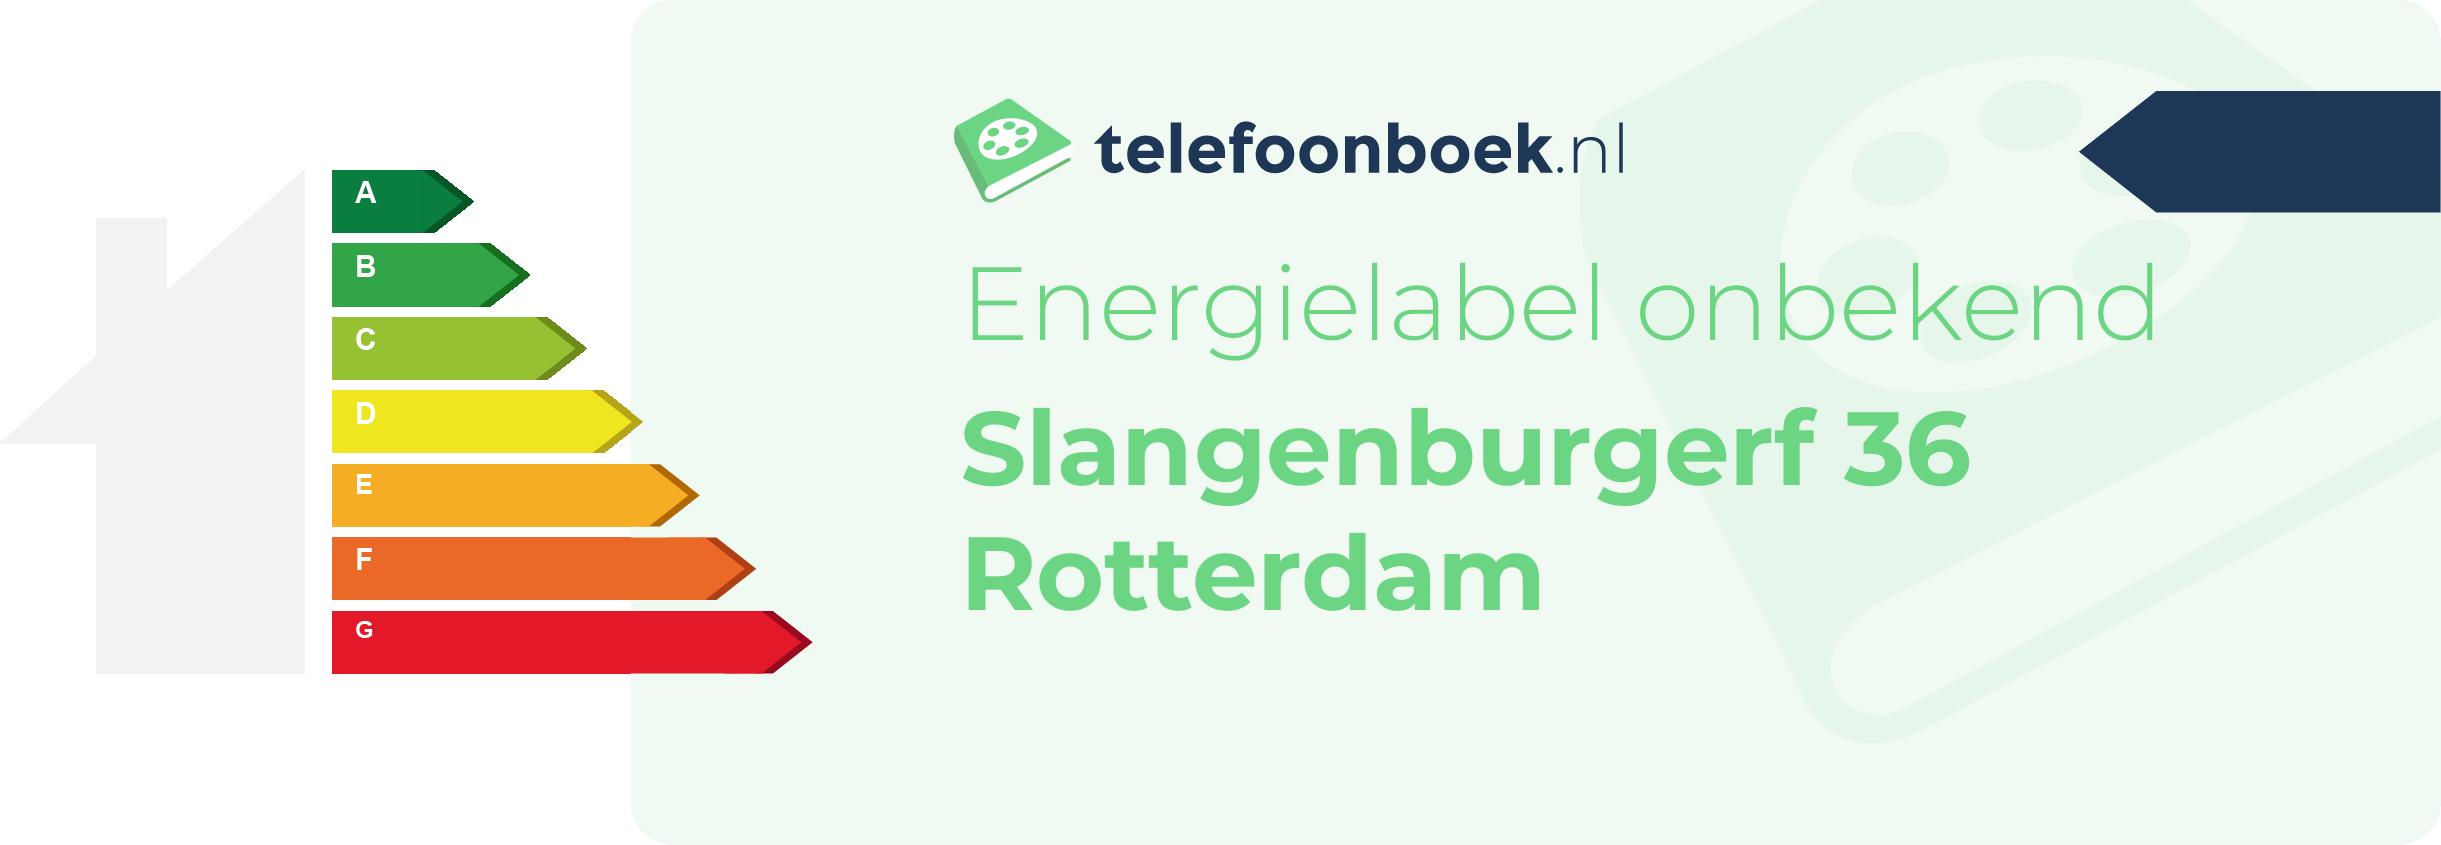 Energielabel Slangenburgerf 36 Rotterdam